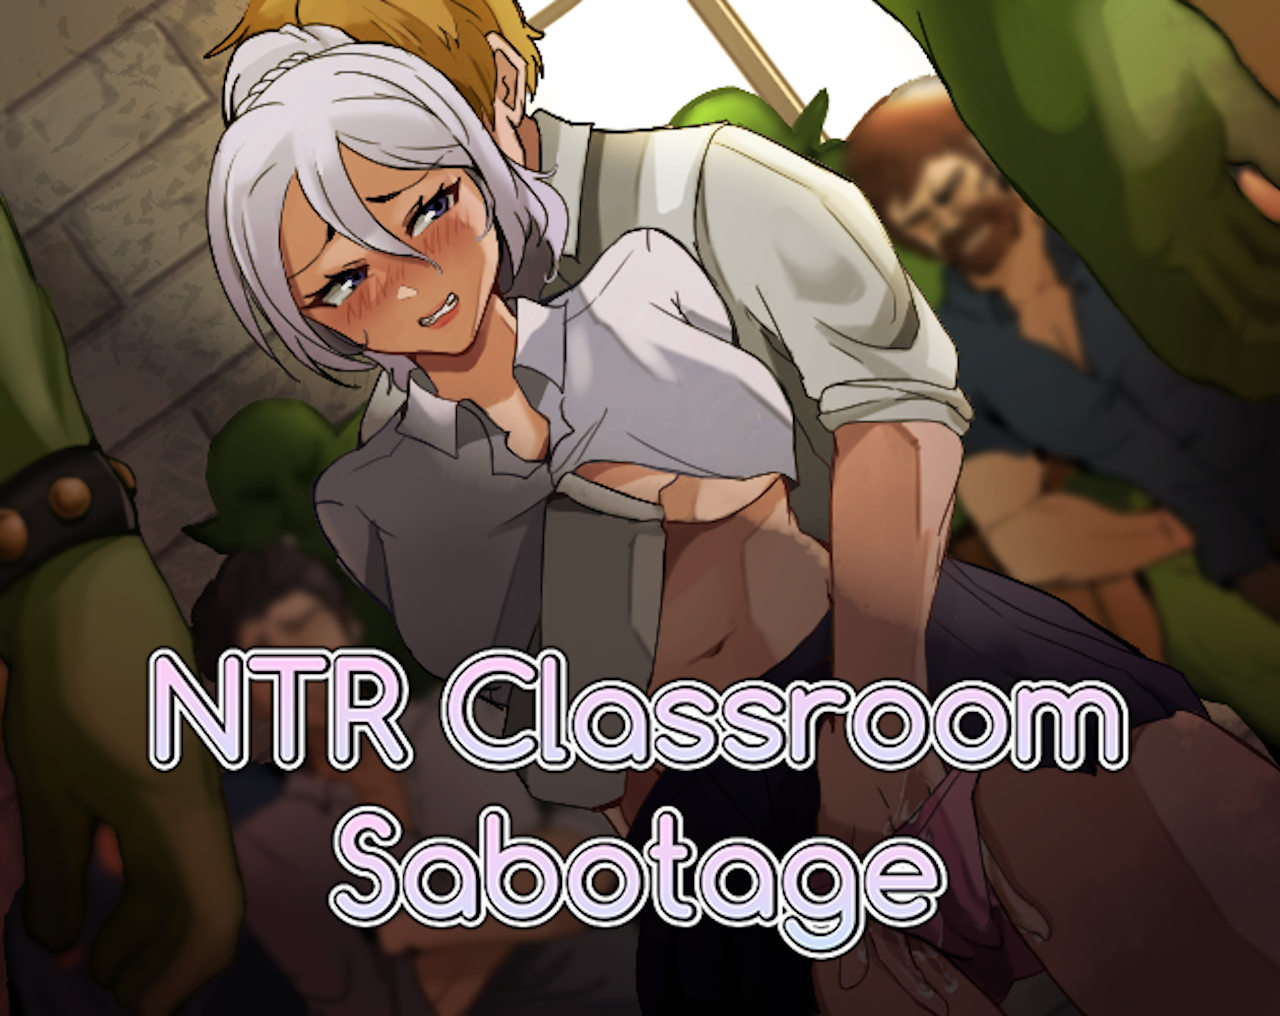 NTR Classroom Sabotage